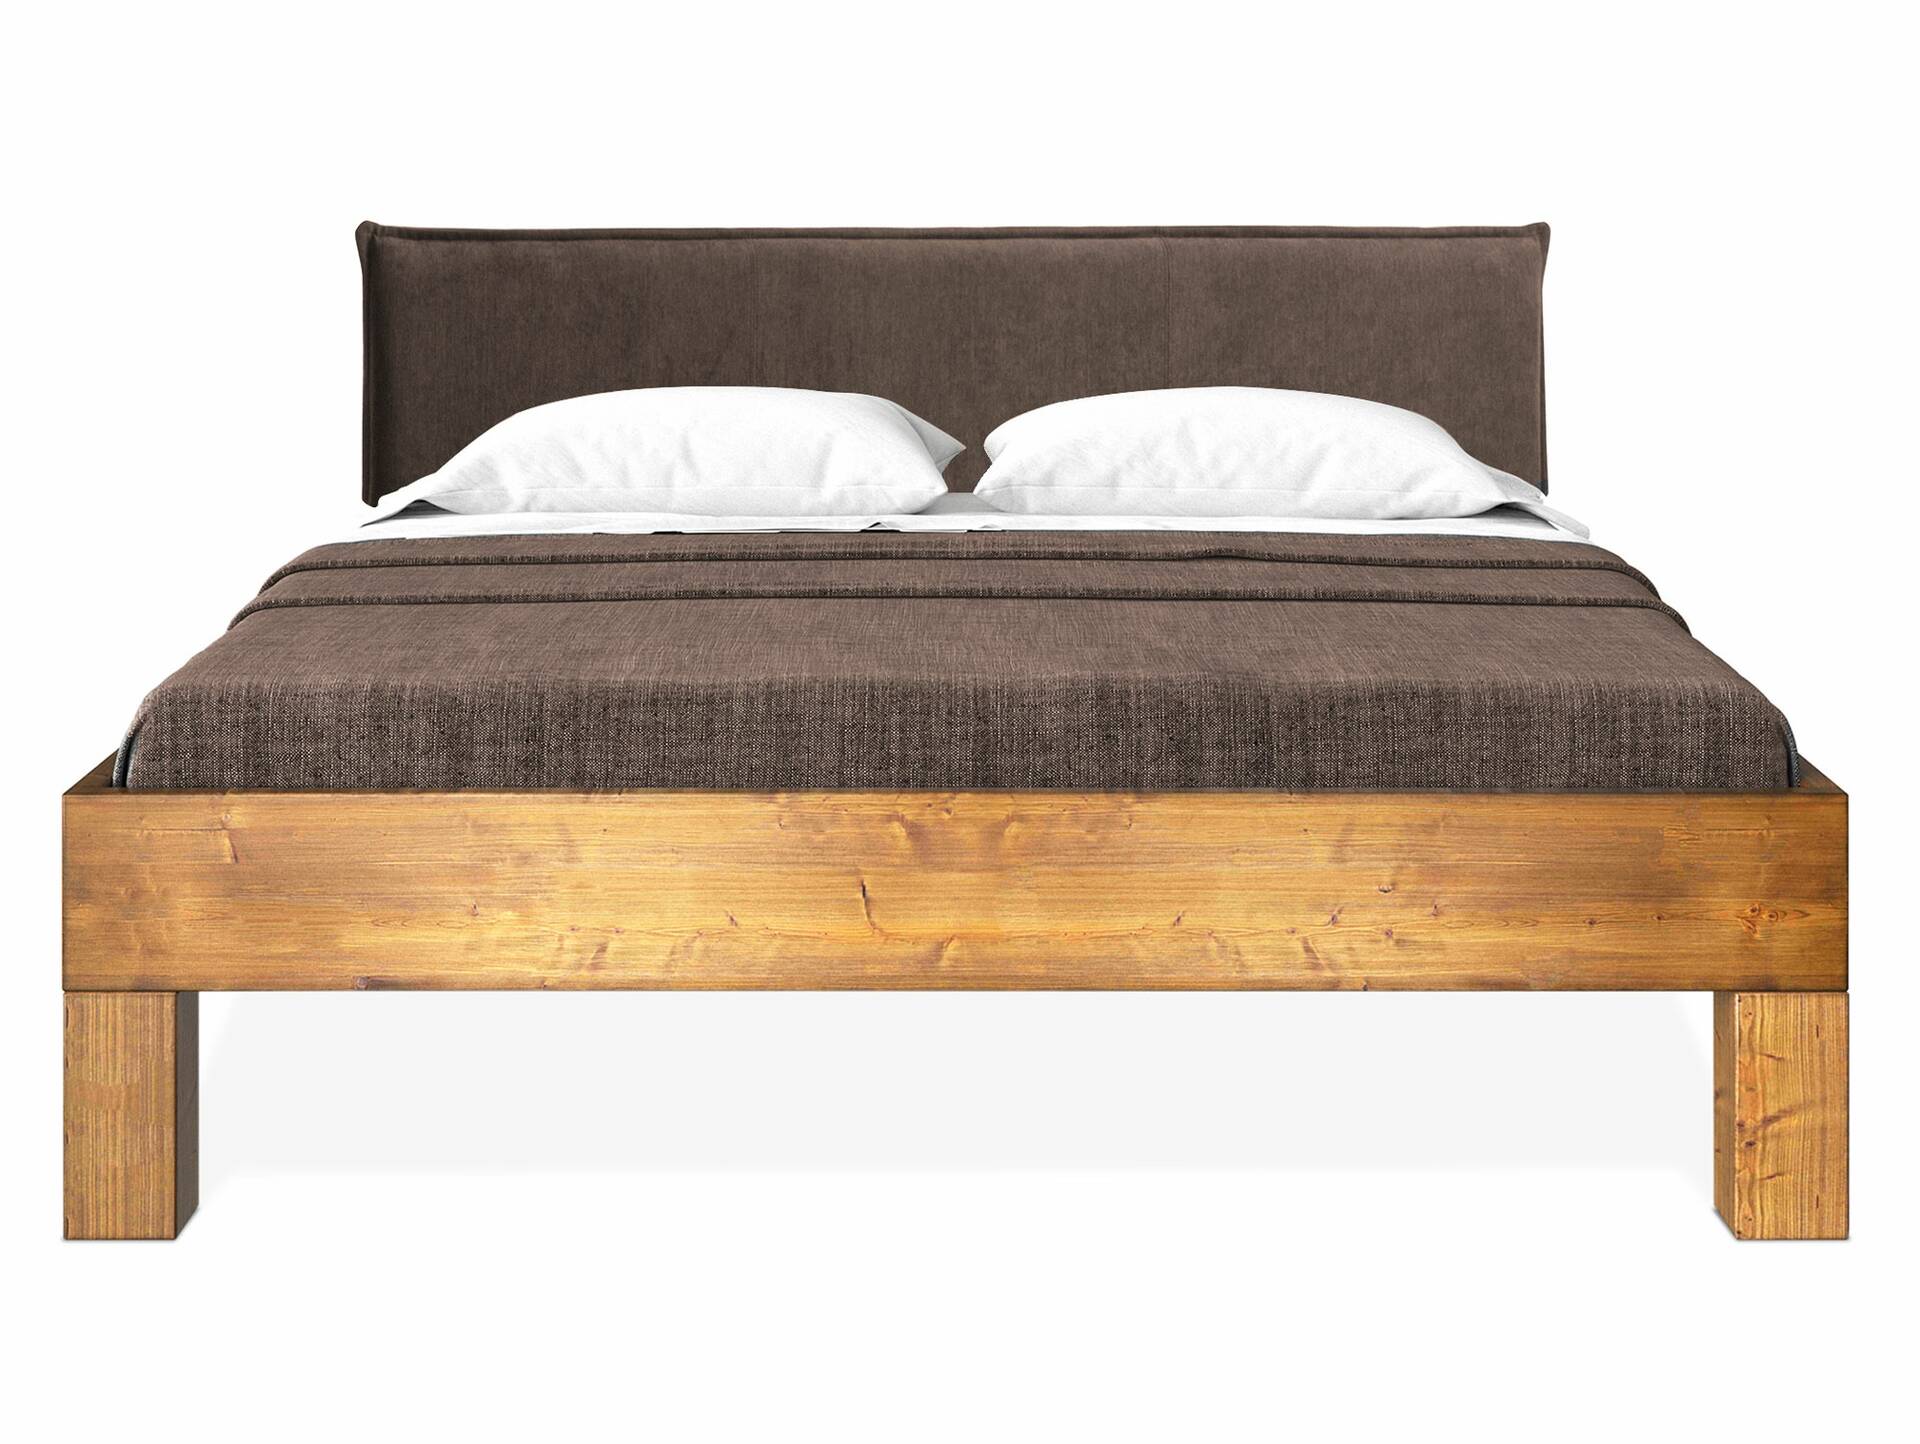 CURBY 4-Fuß-Bett mit Polster-Kopfteil, Material Massivholz, rustikale Altholzoptik, Fichte 90 x 200 cm | vintage | Stoff Braun ohne Steppung | Standardhöhe